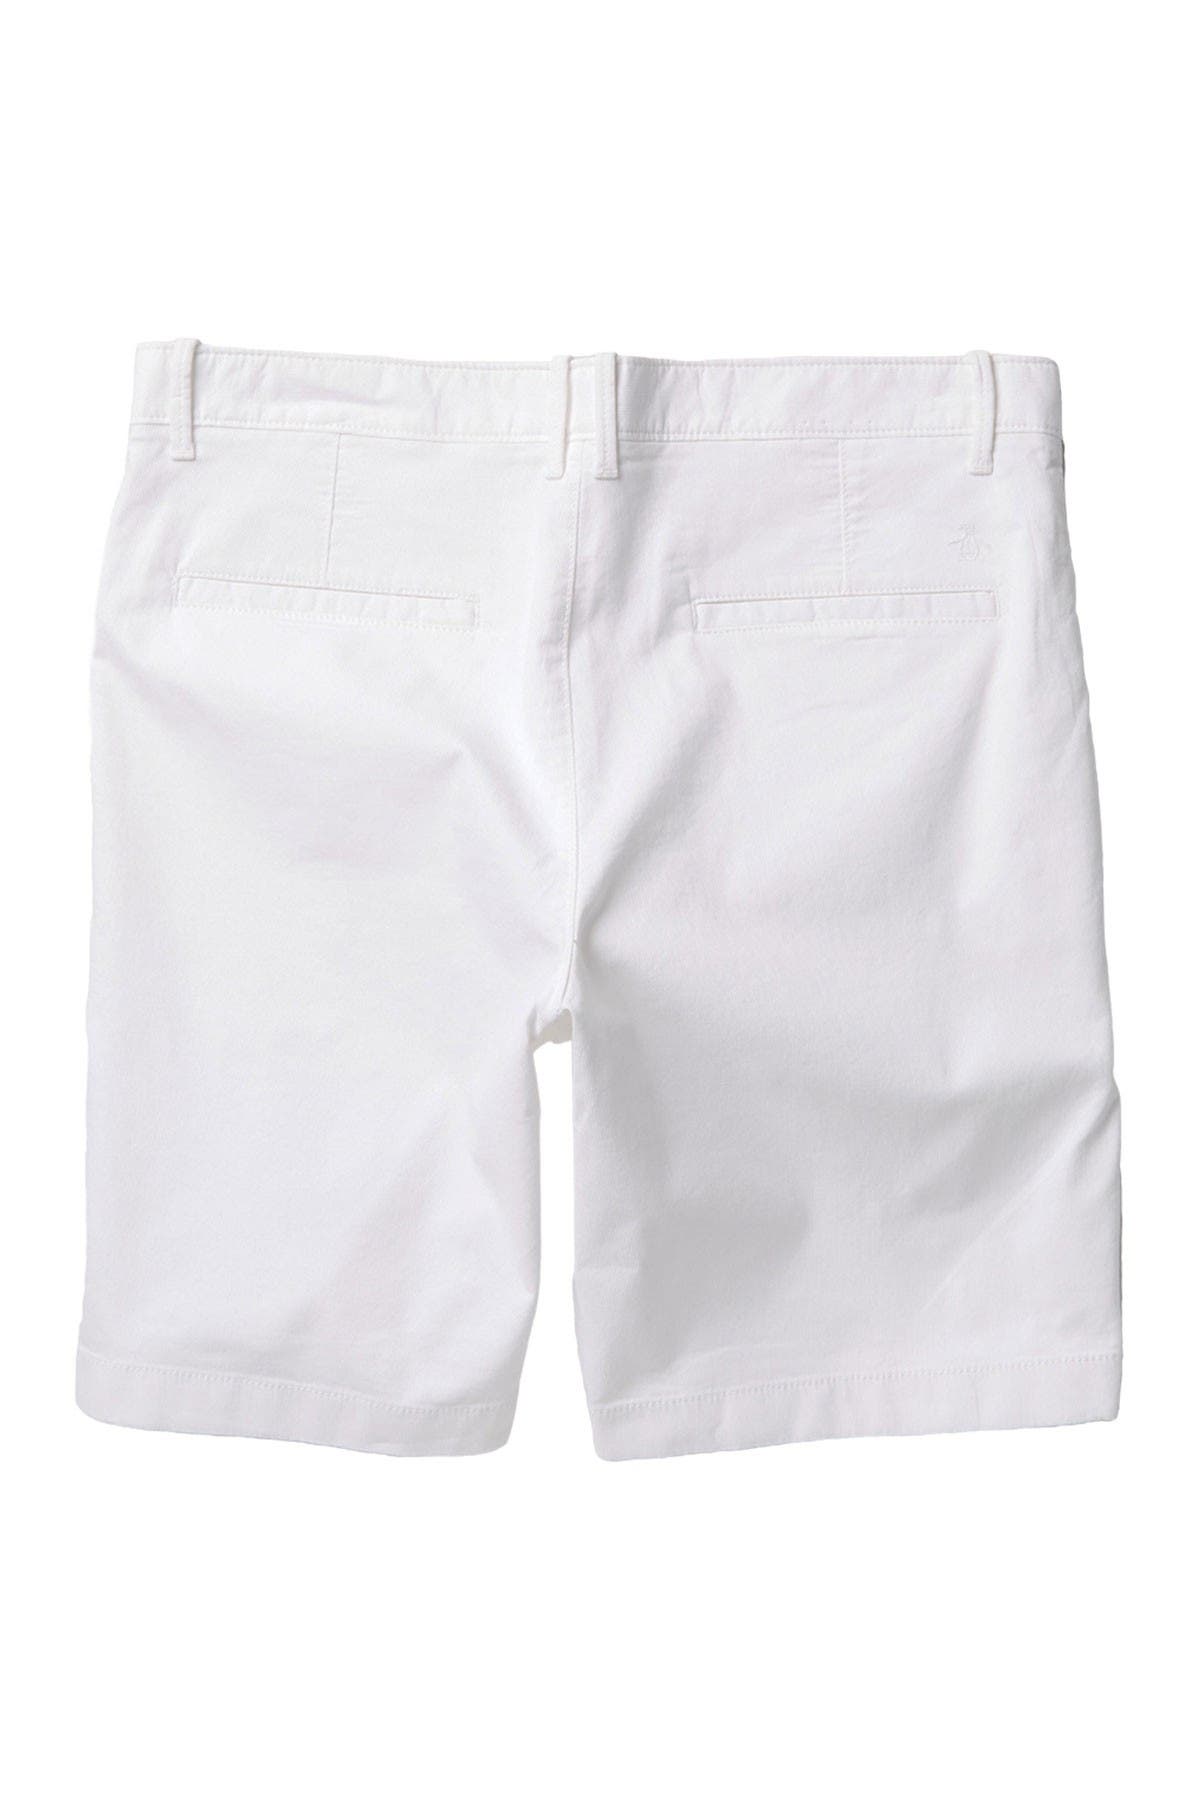 Original Penguin Bedford 9" Stretch Cotton Shorts In Open White8